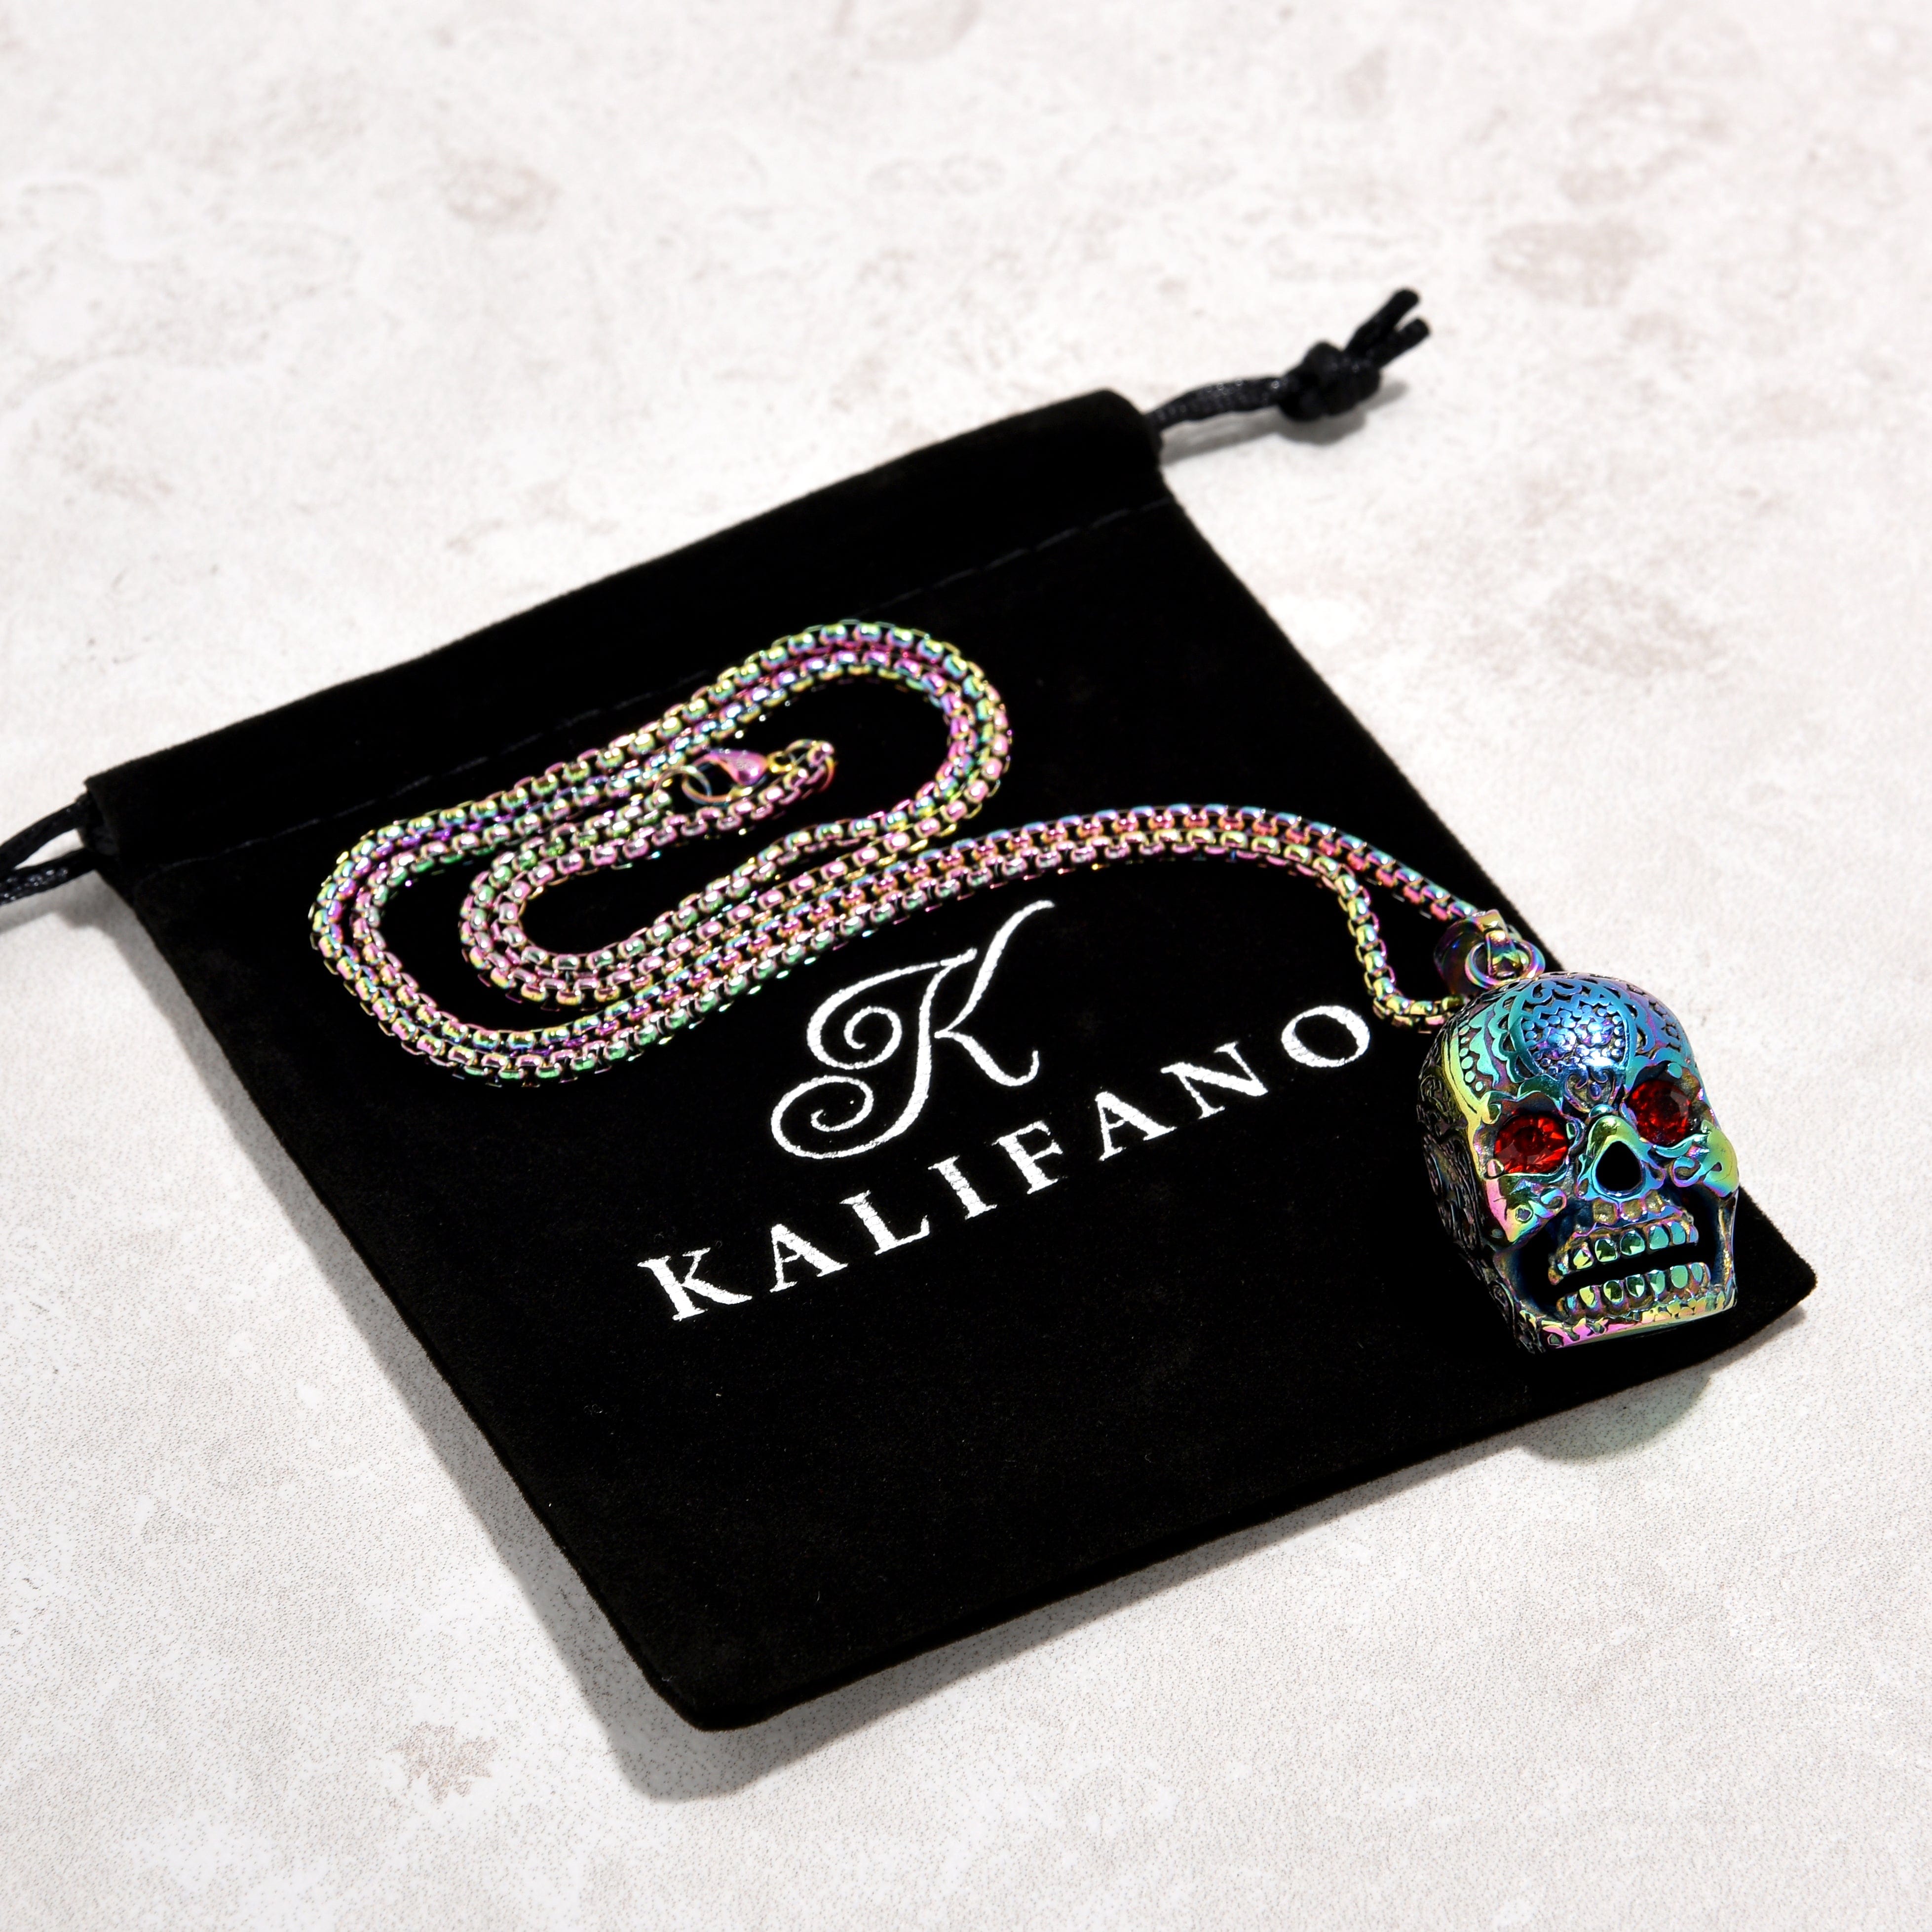 Kalifano Steel Hearts Jewelry Aurora Borealis Skull Steel Hearts Necklace SHN527-AB-R